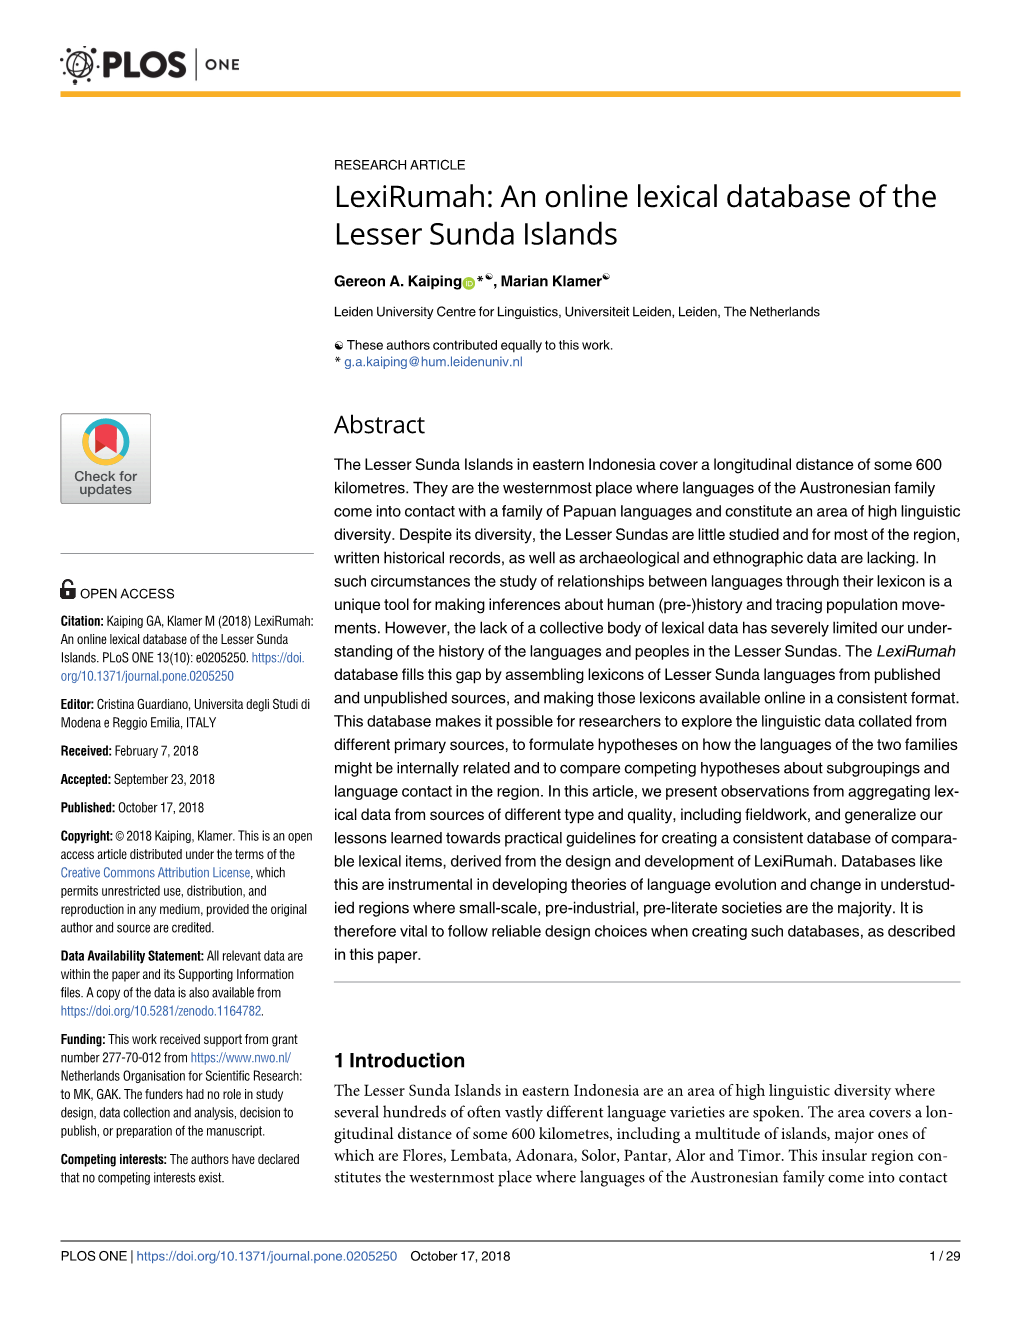 Lexirumah: an Online Lexical Database of the Lesser Sunda Islands